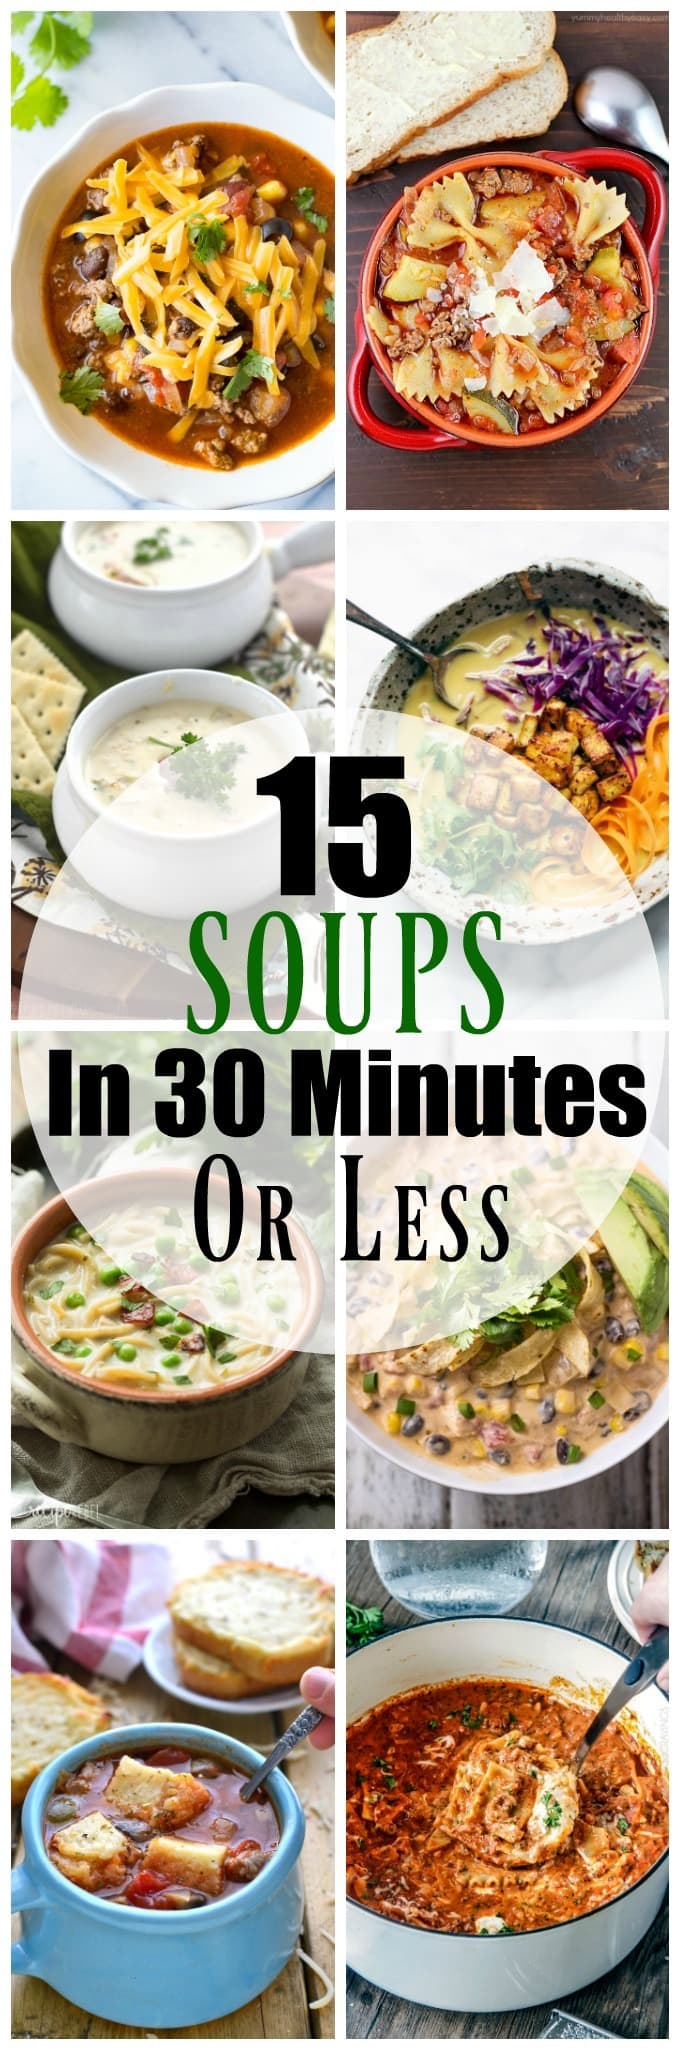 15 Easy Soup Recipes in 30 Minutes or Less via @jennikolaus